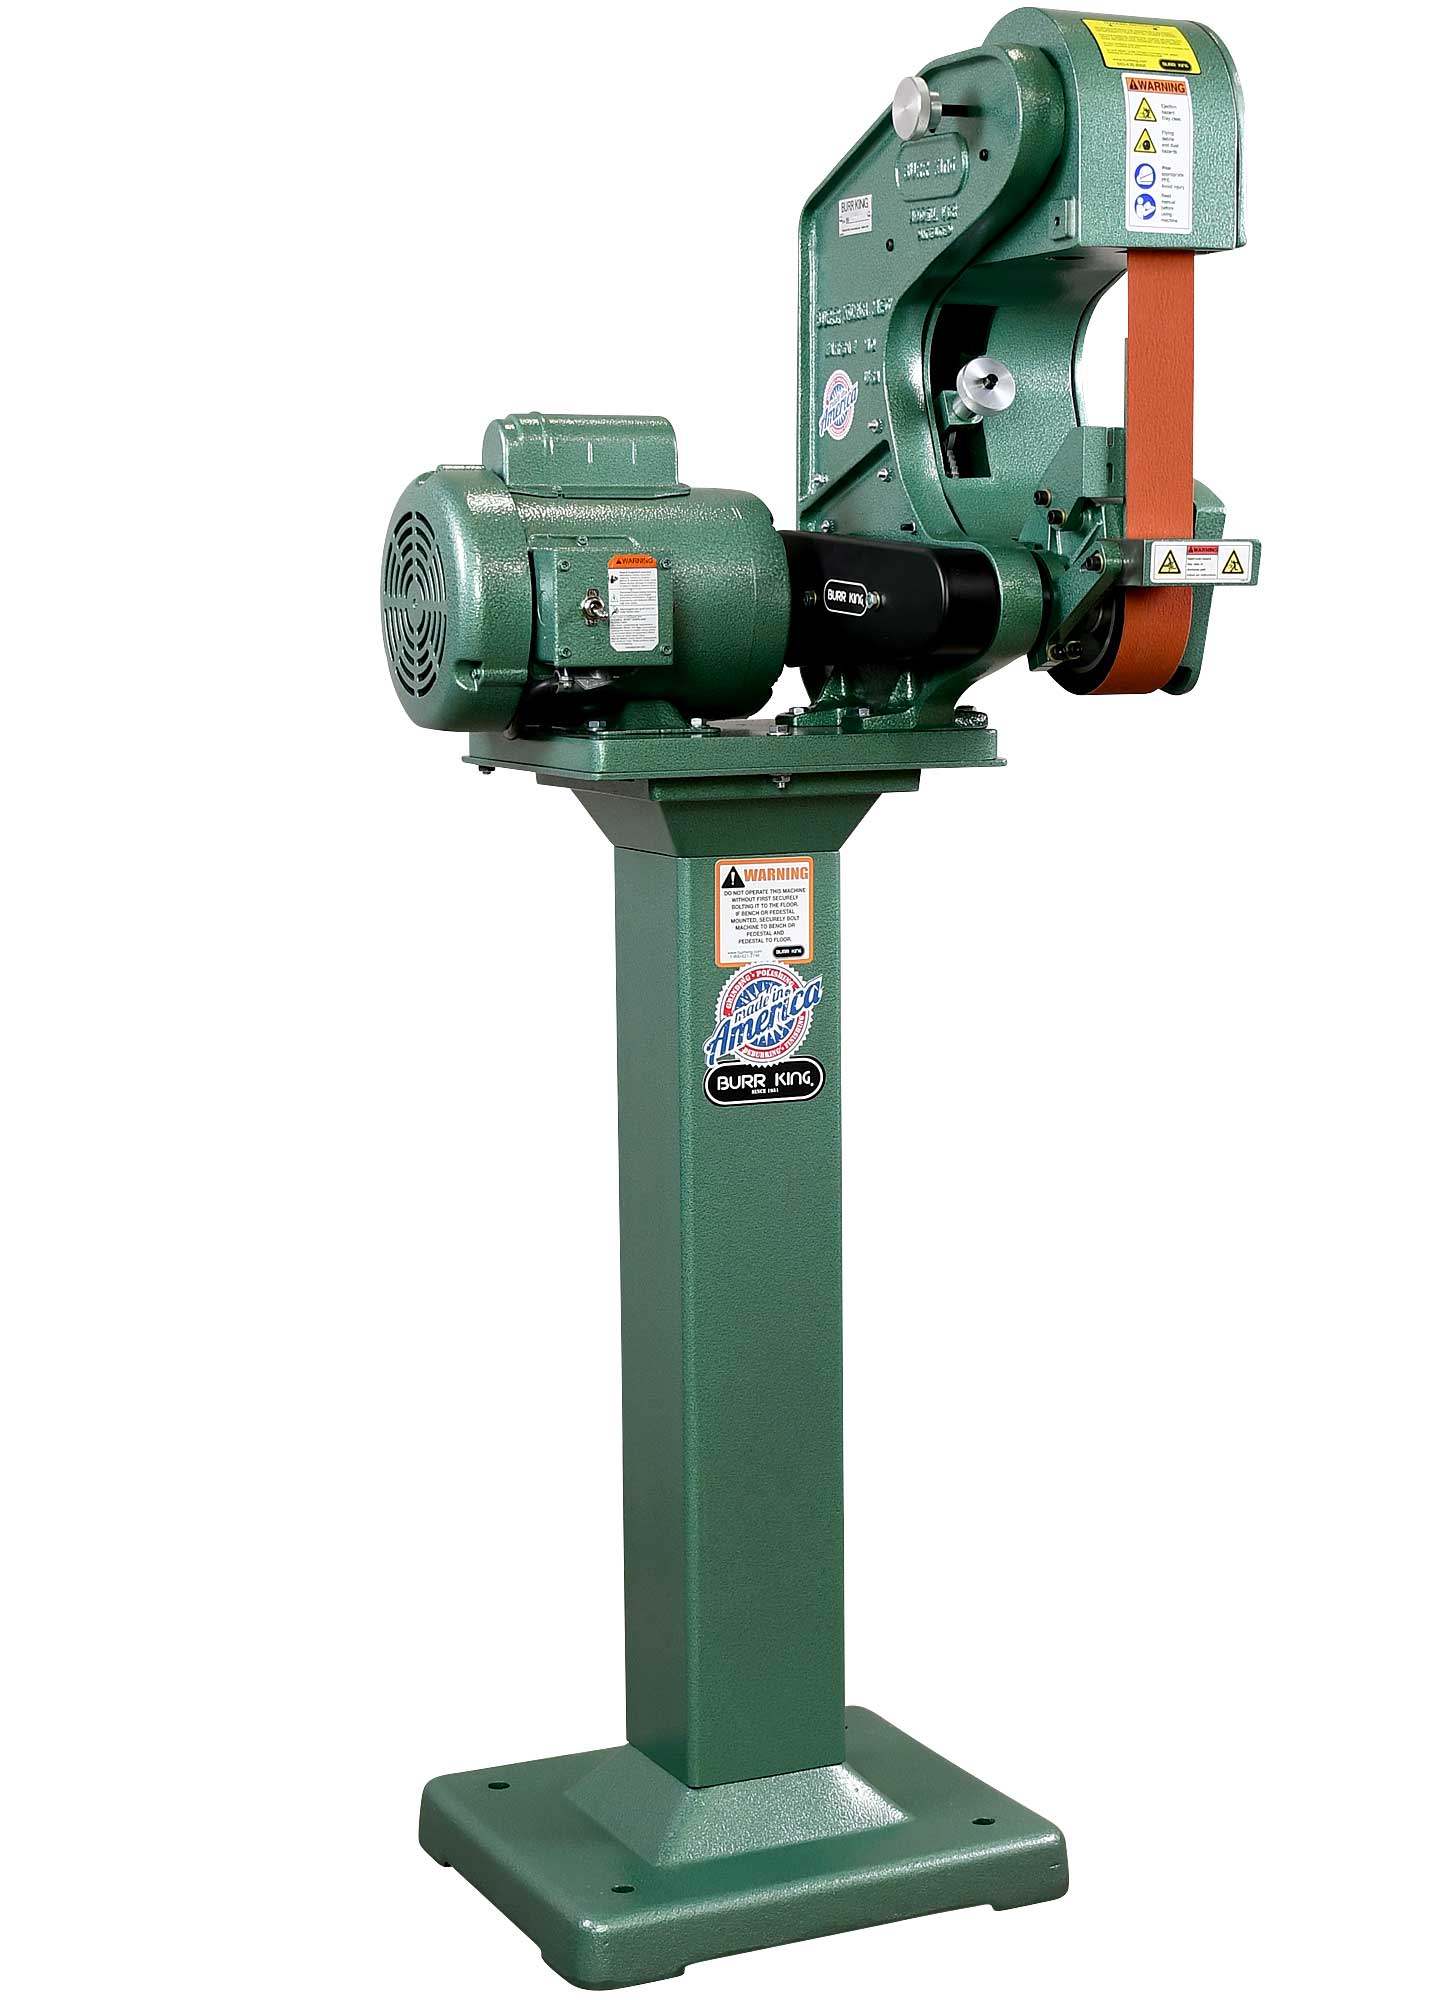 40100 Model 482 belt grinder / belt sander shown with optional 01 pedestal.   Fixed and adjustable height pedestals are available for all Burr King grinders and polishers.